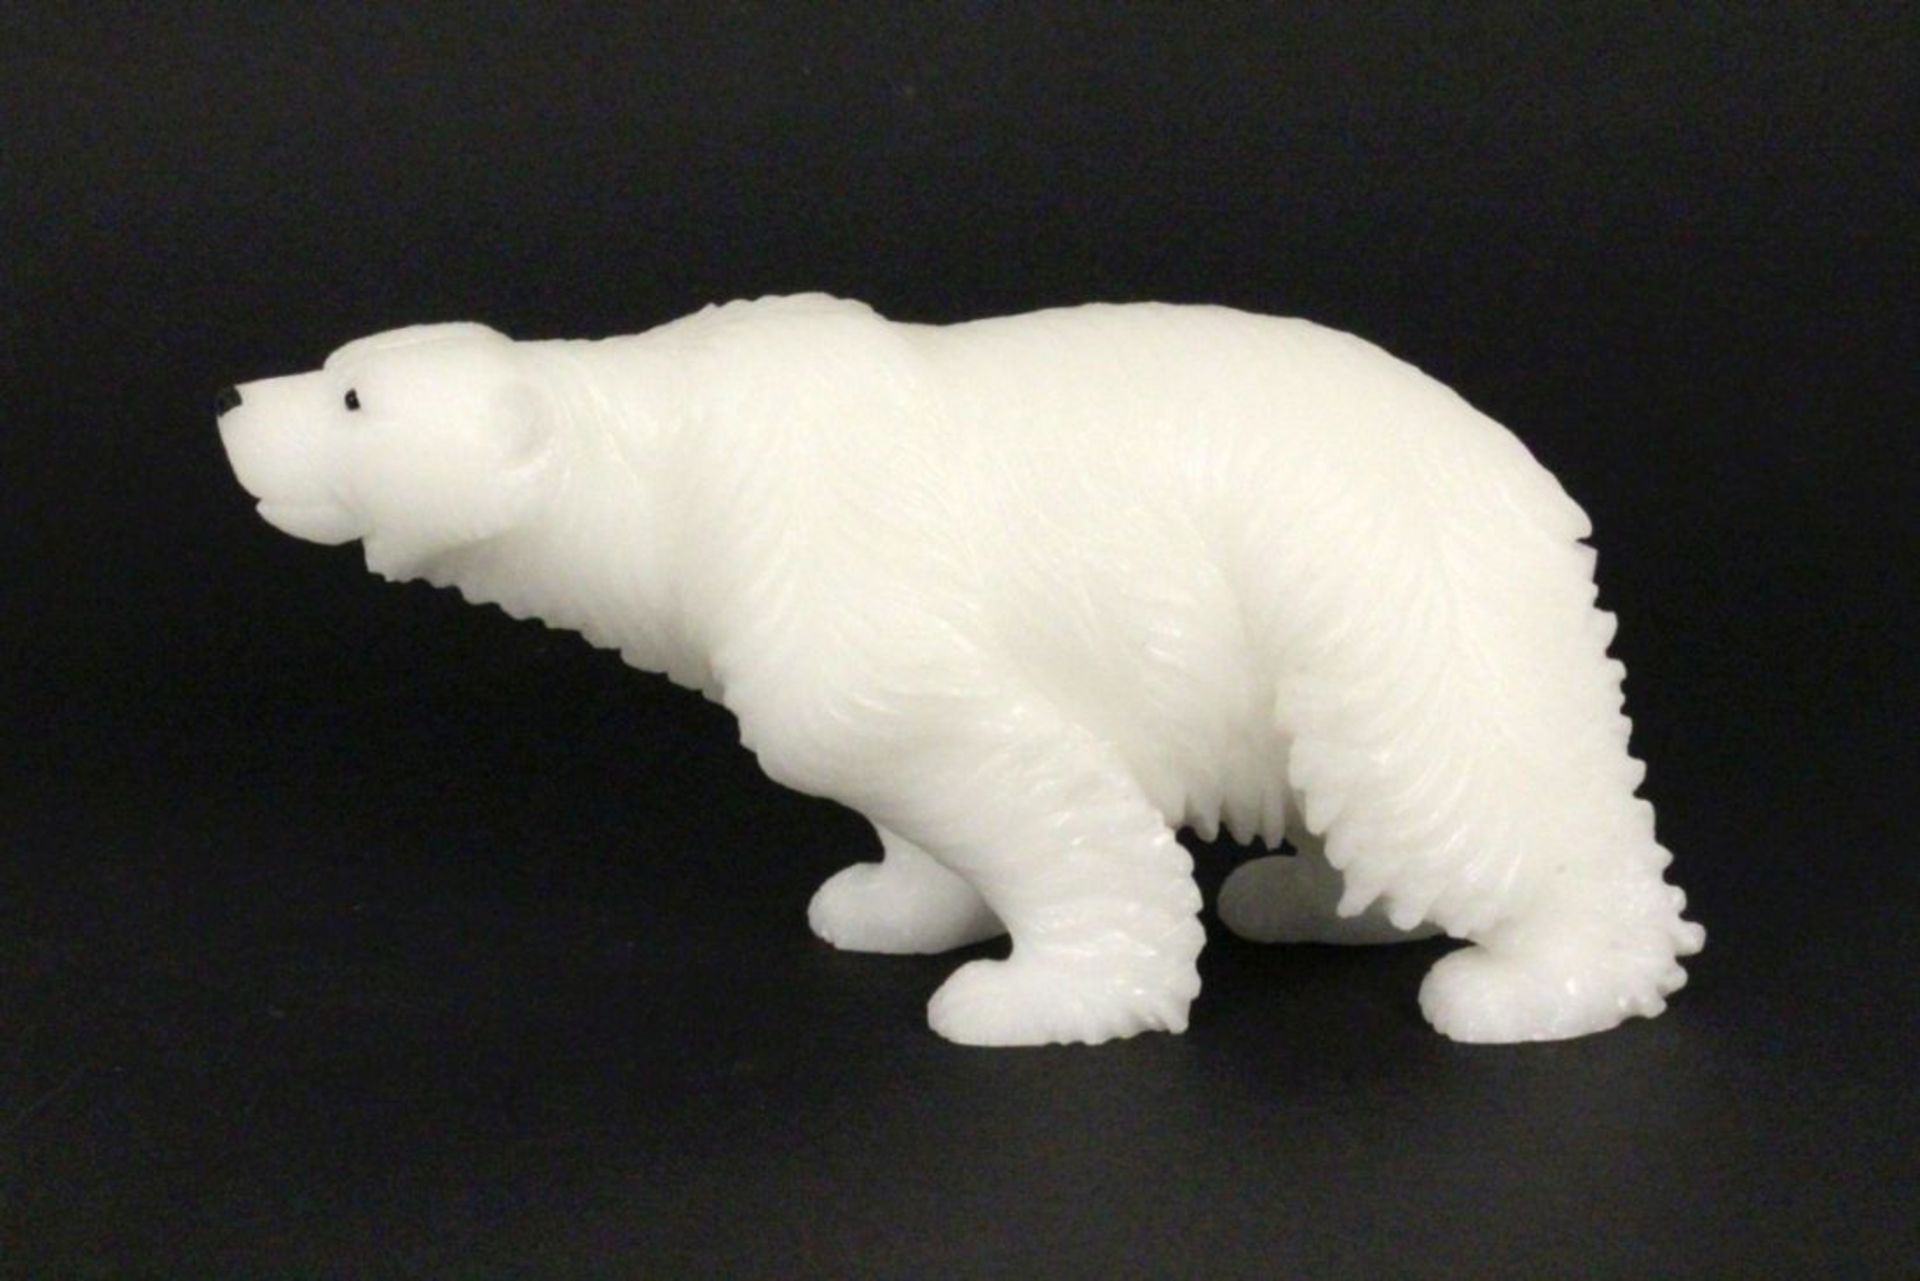 EISBÄRAus weißem Onyx (?) geschnittene Tierfigur. L.20cm, H.11cmAufrufpreis: 100 EUR

A POLAR